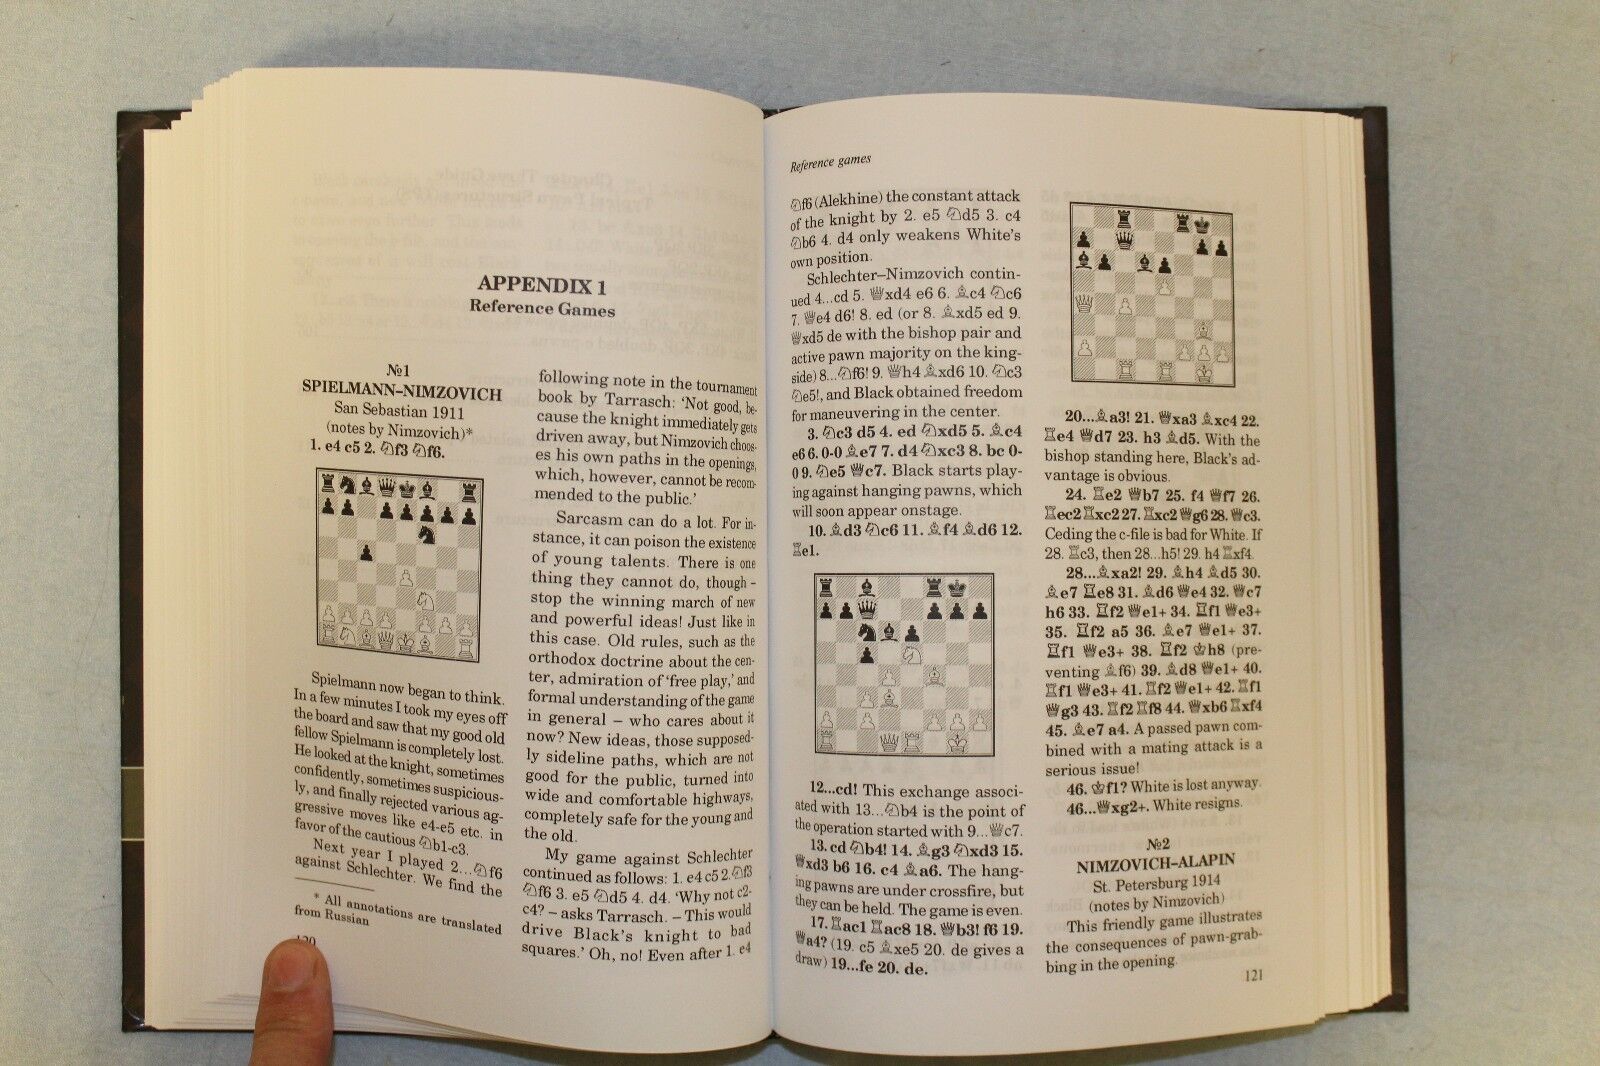 11073.Chess Book: Grigory Bogdanovich. Play 2...Nf6! in the Sicilian. 2009